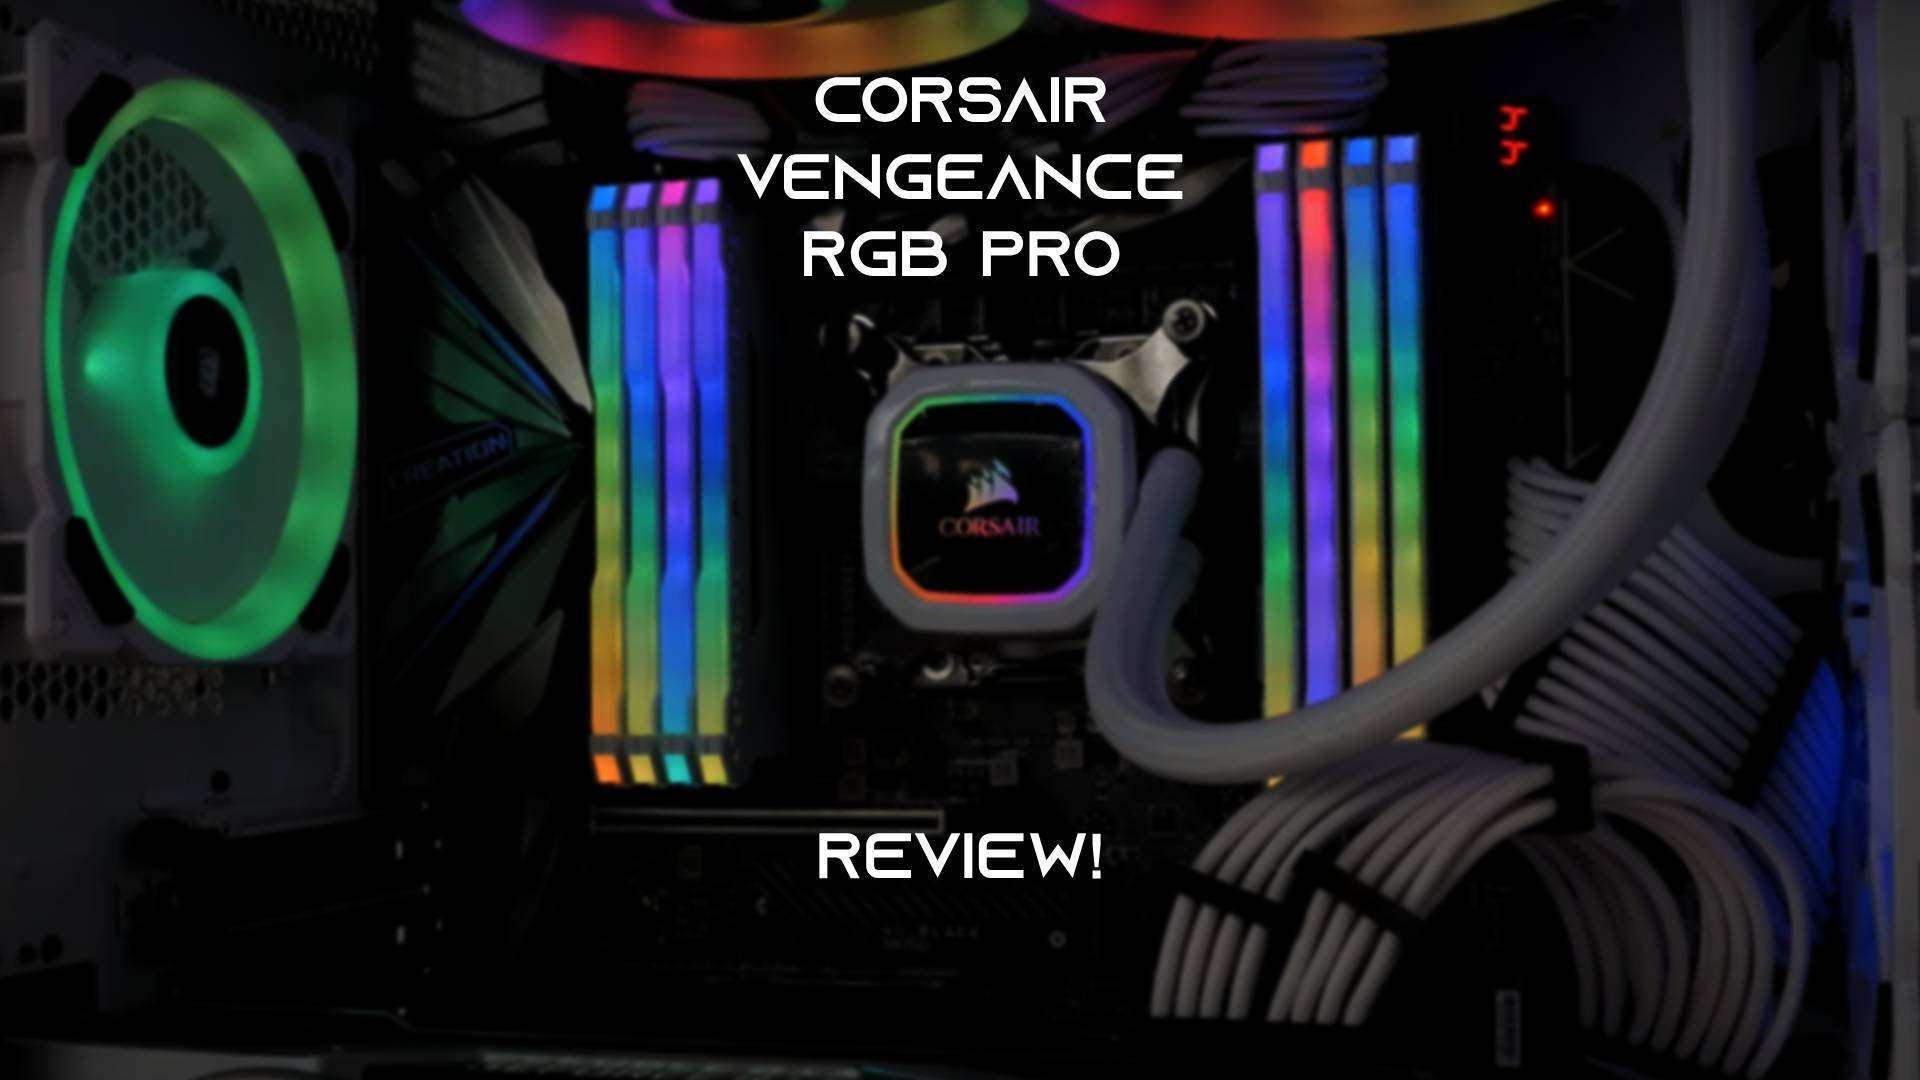 CORSAIR VENGEANCE RGB PRO 16GB Review